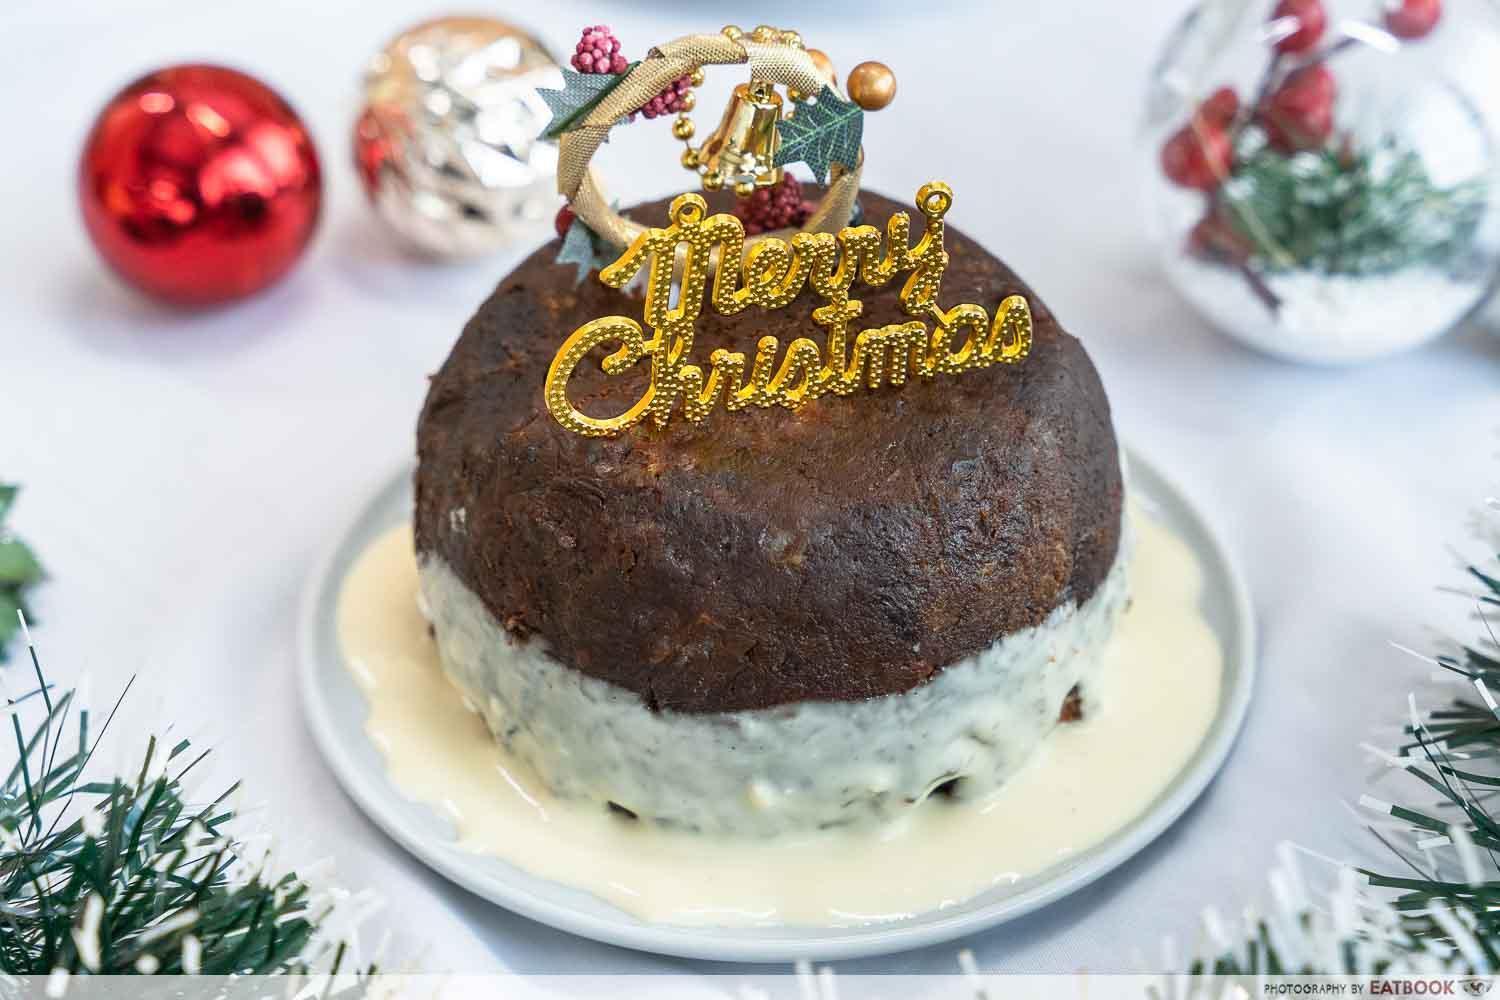 carlton hotel singapore christmas pudding